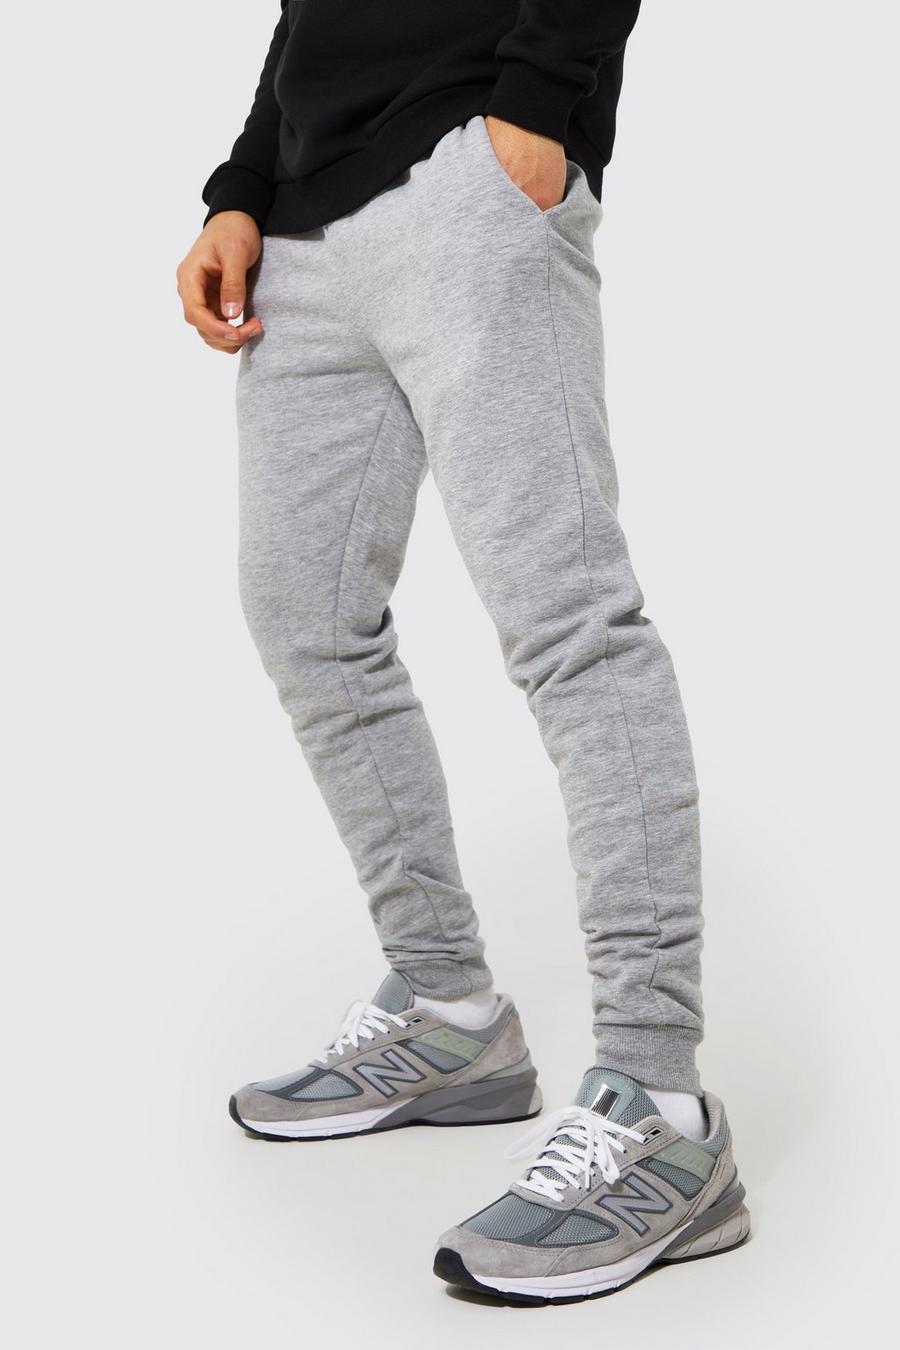 Pantaloni tuta Basic Skinny Fit in cotone REEL, Grey marl grigio